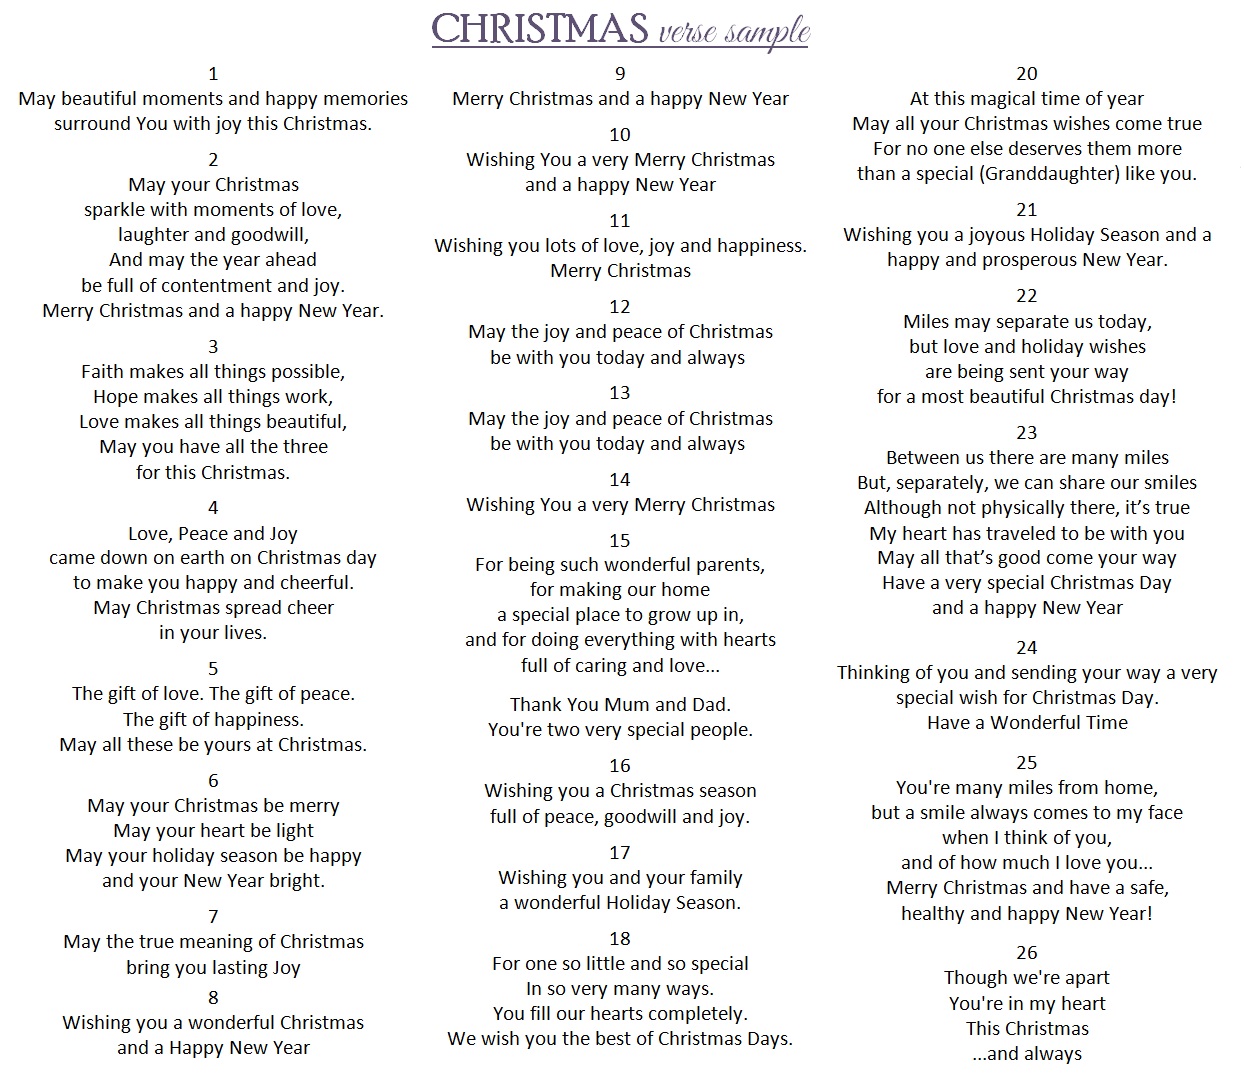 Christmas verse samples